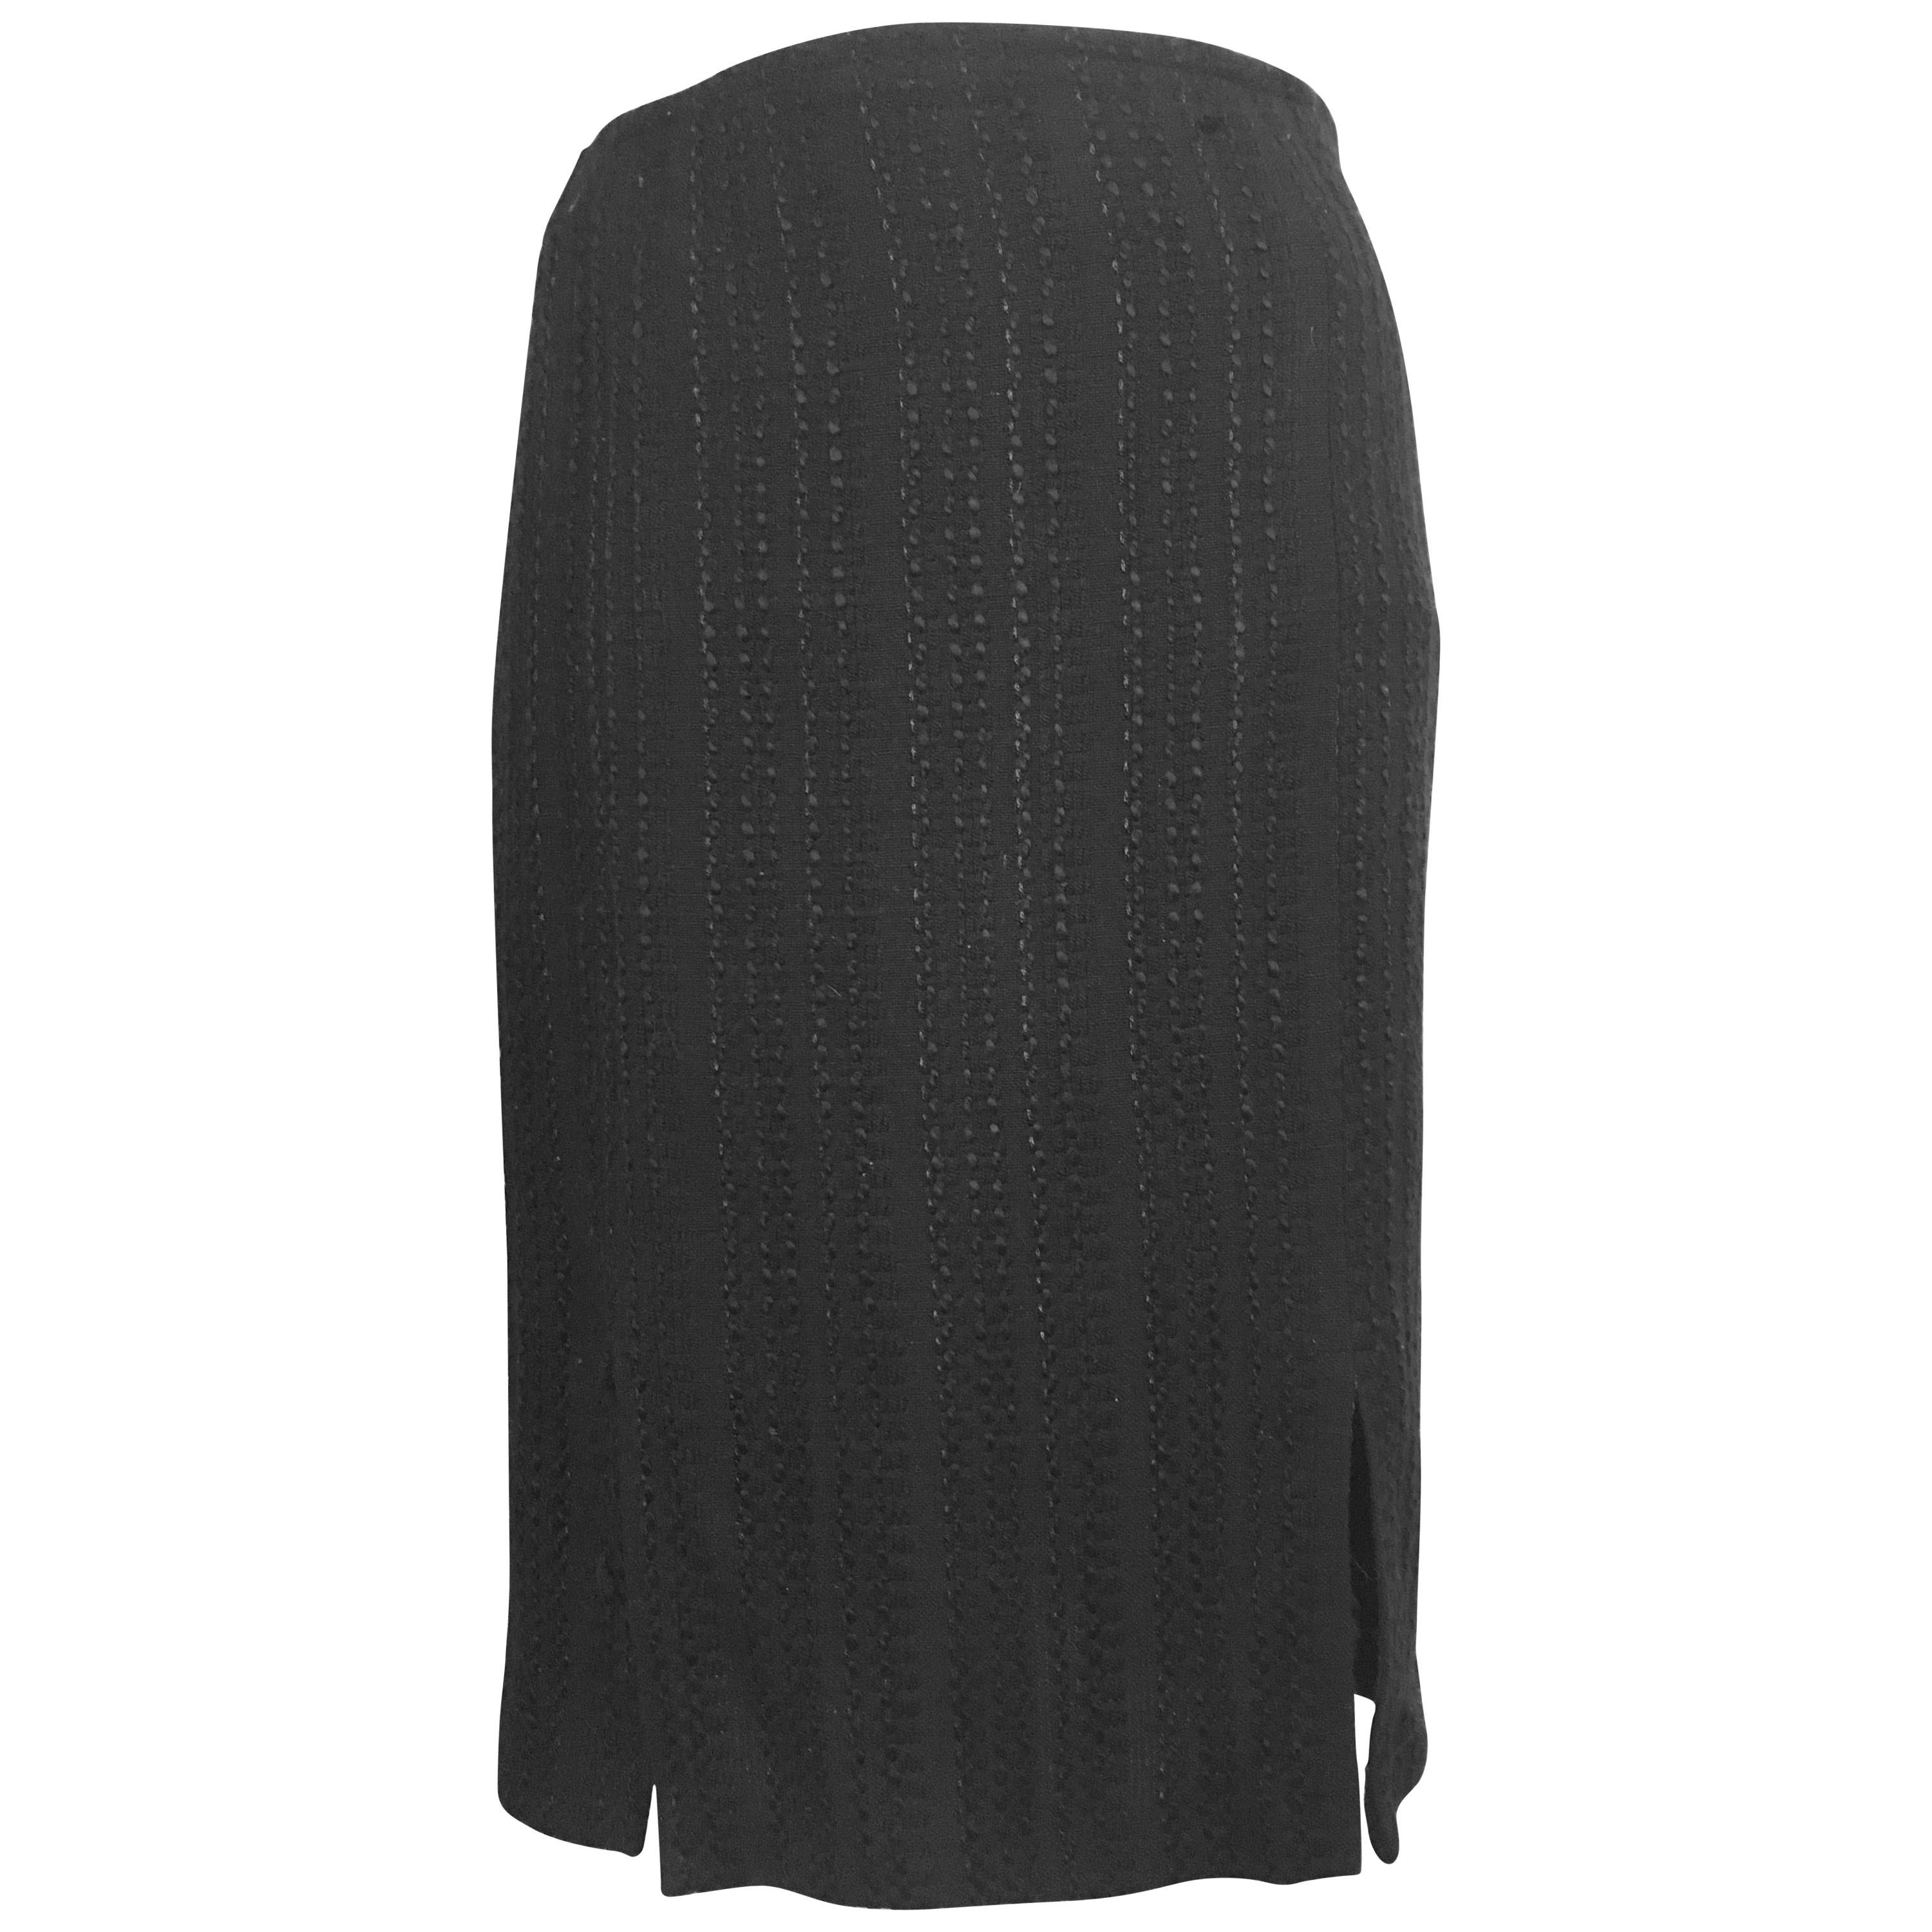 Pierre Cardin 1990s Black Skirt Size 6. For Sale